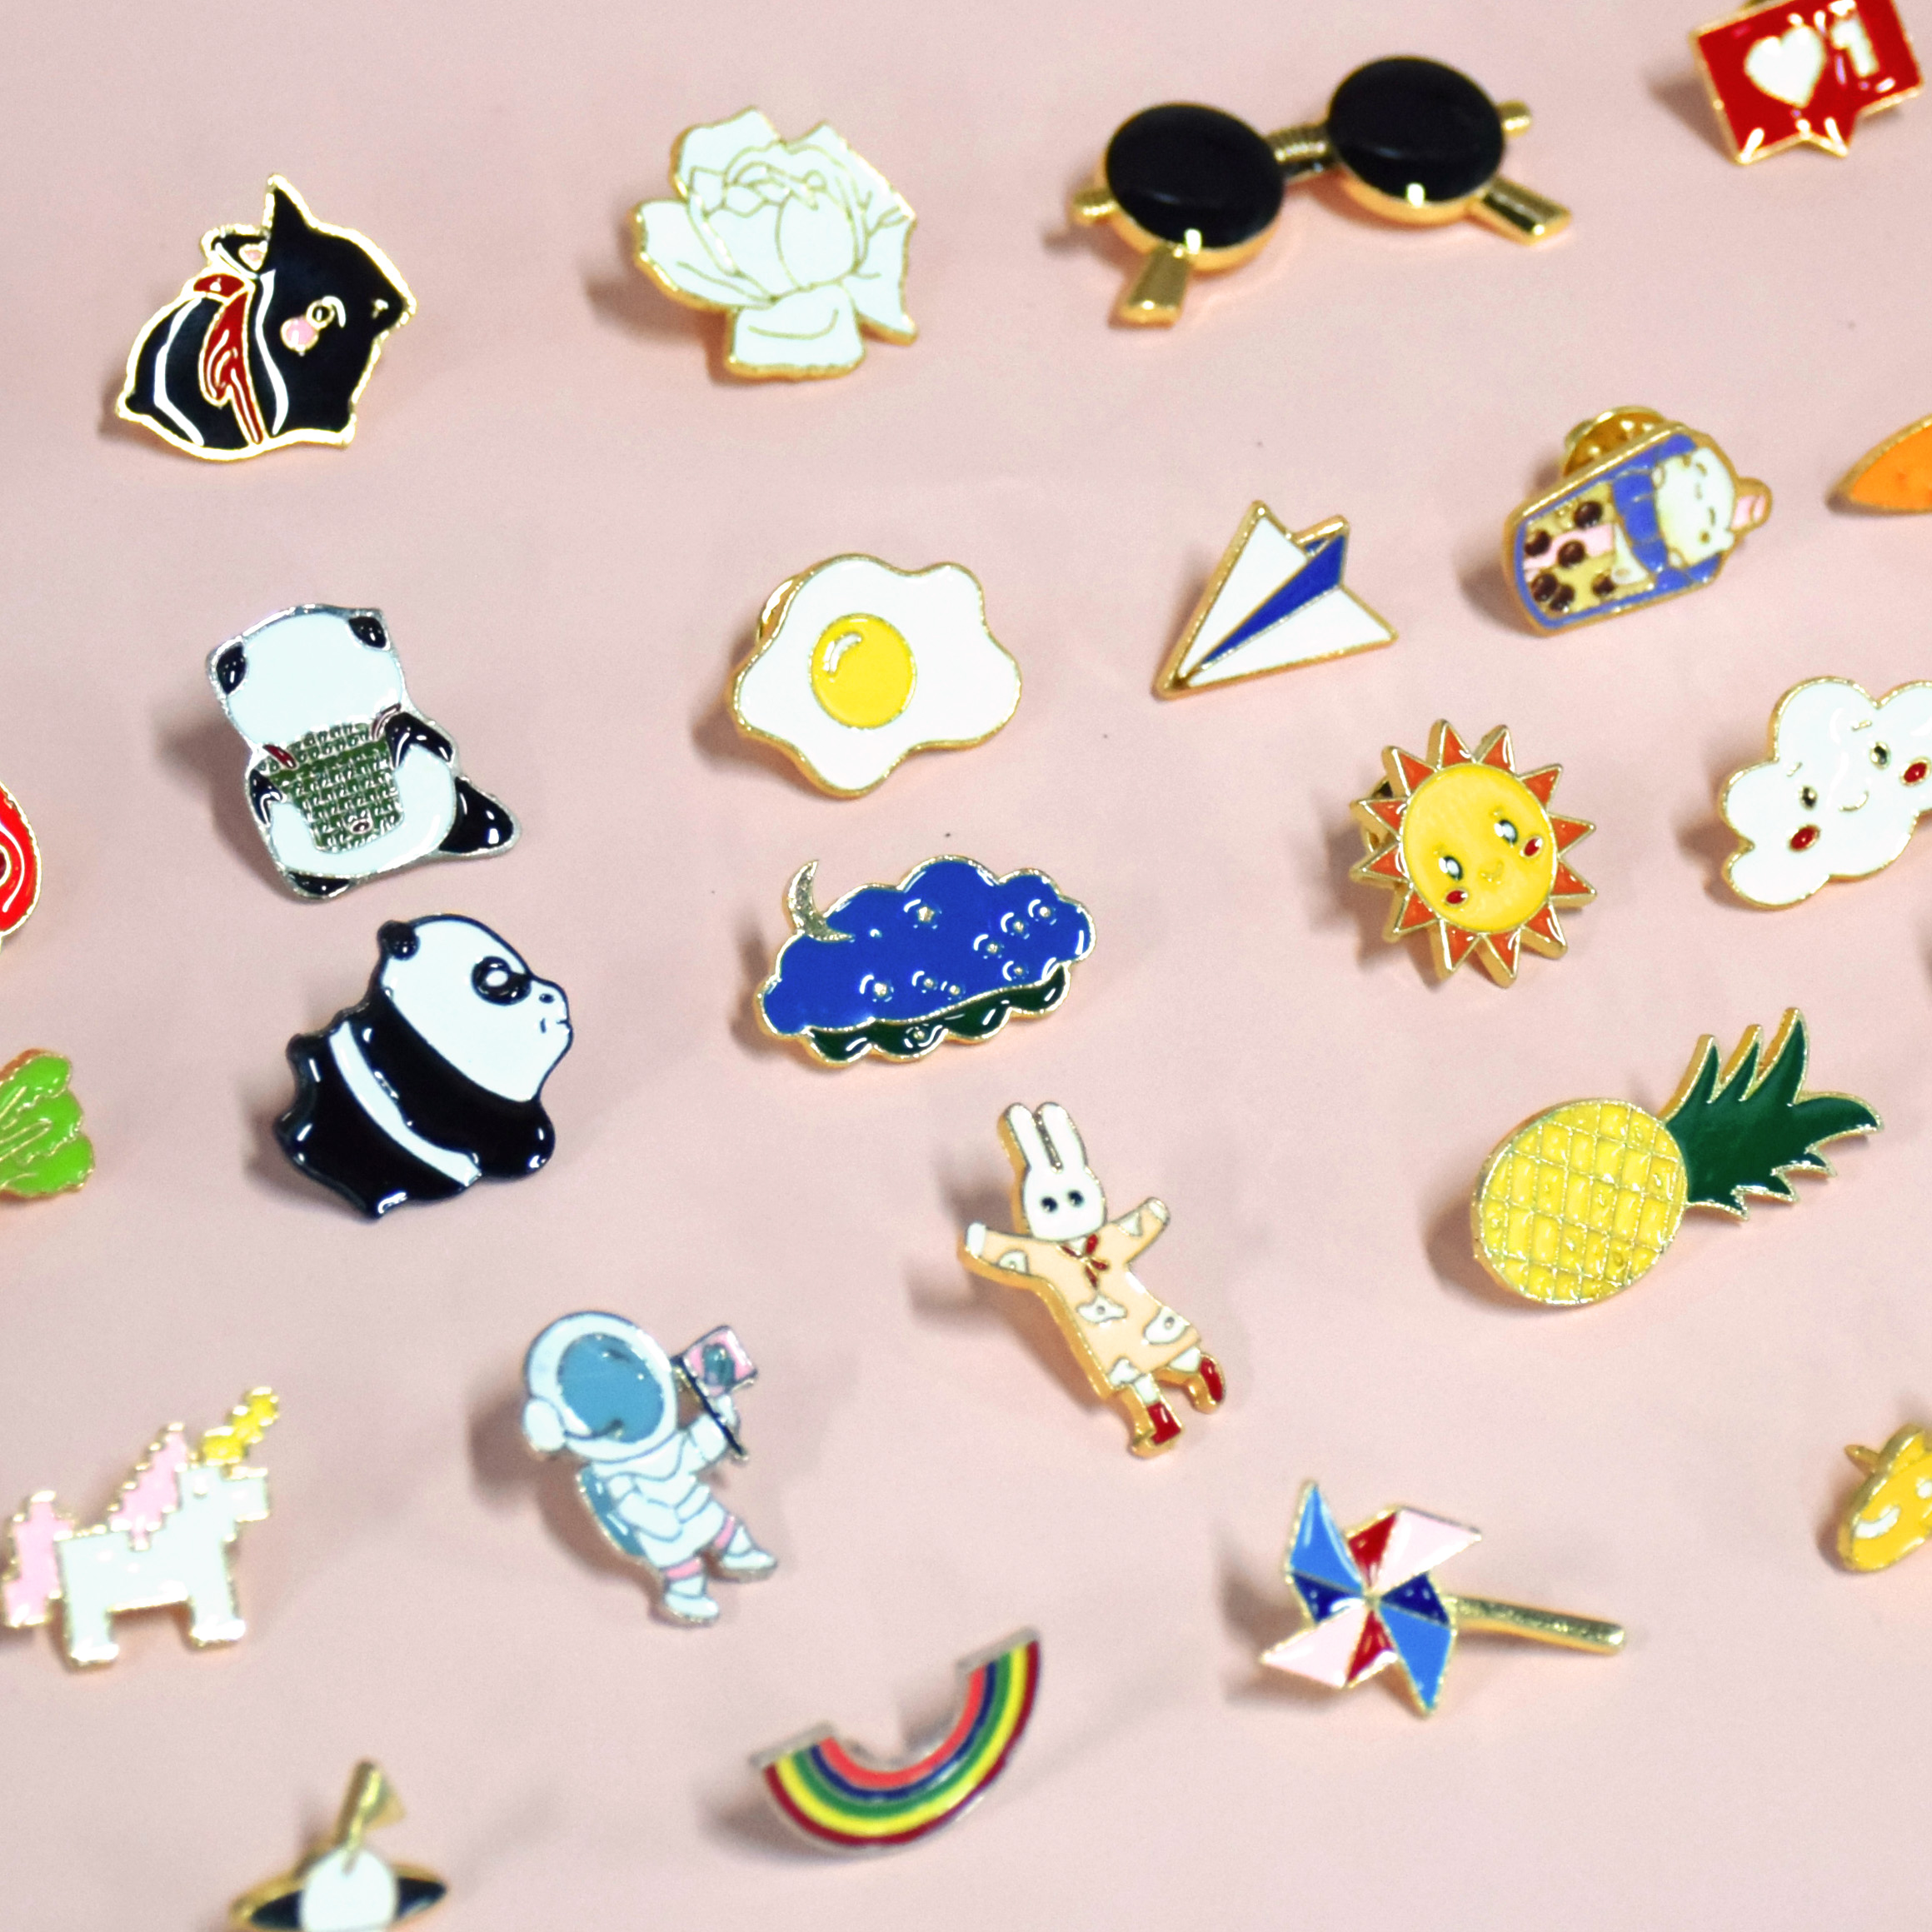 a variety of custom lapel pins